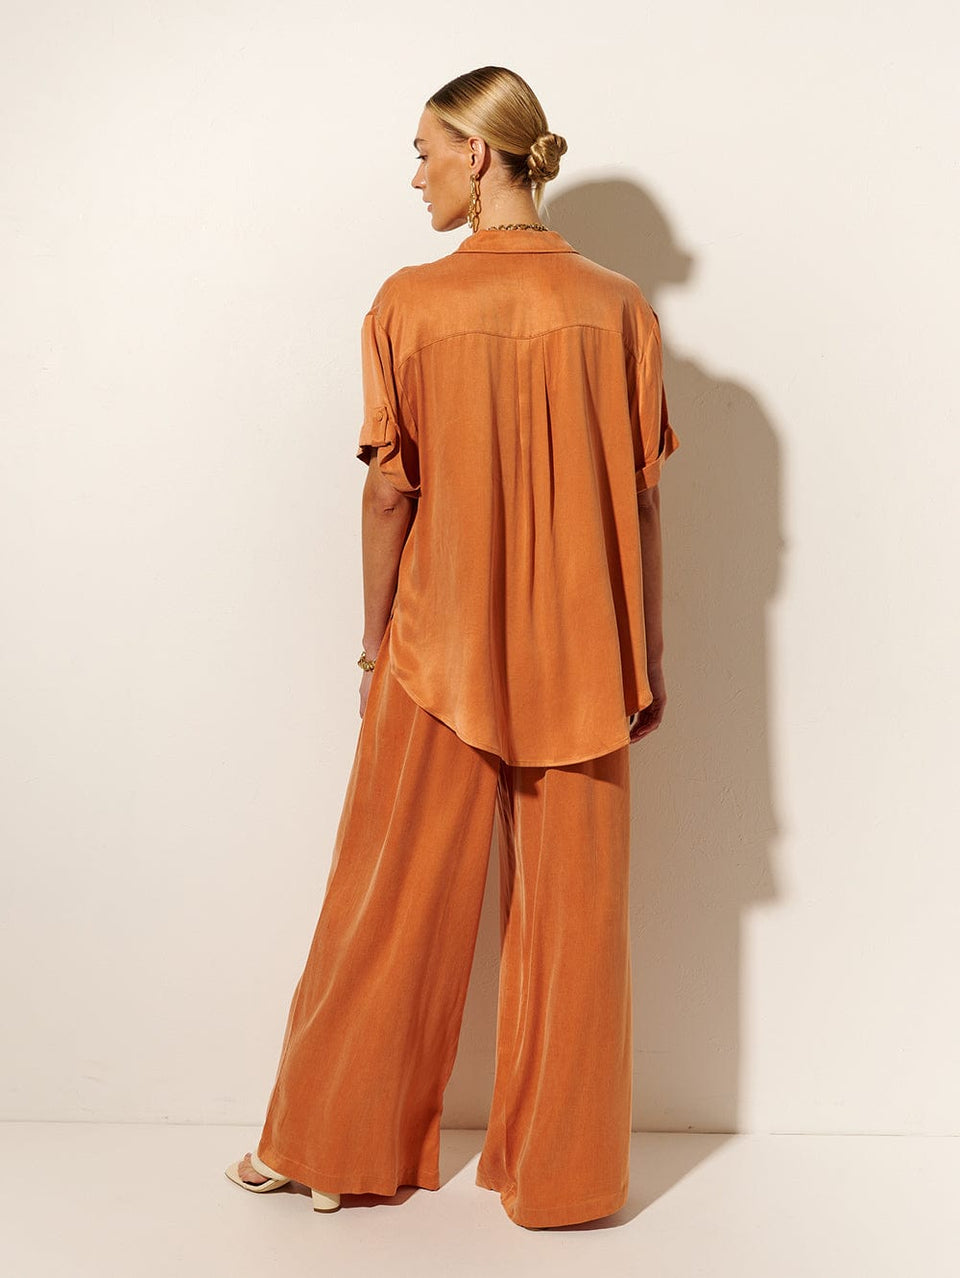 KIVARI Bianca Shirt | Model wears Orange Shirt Back View